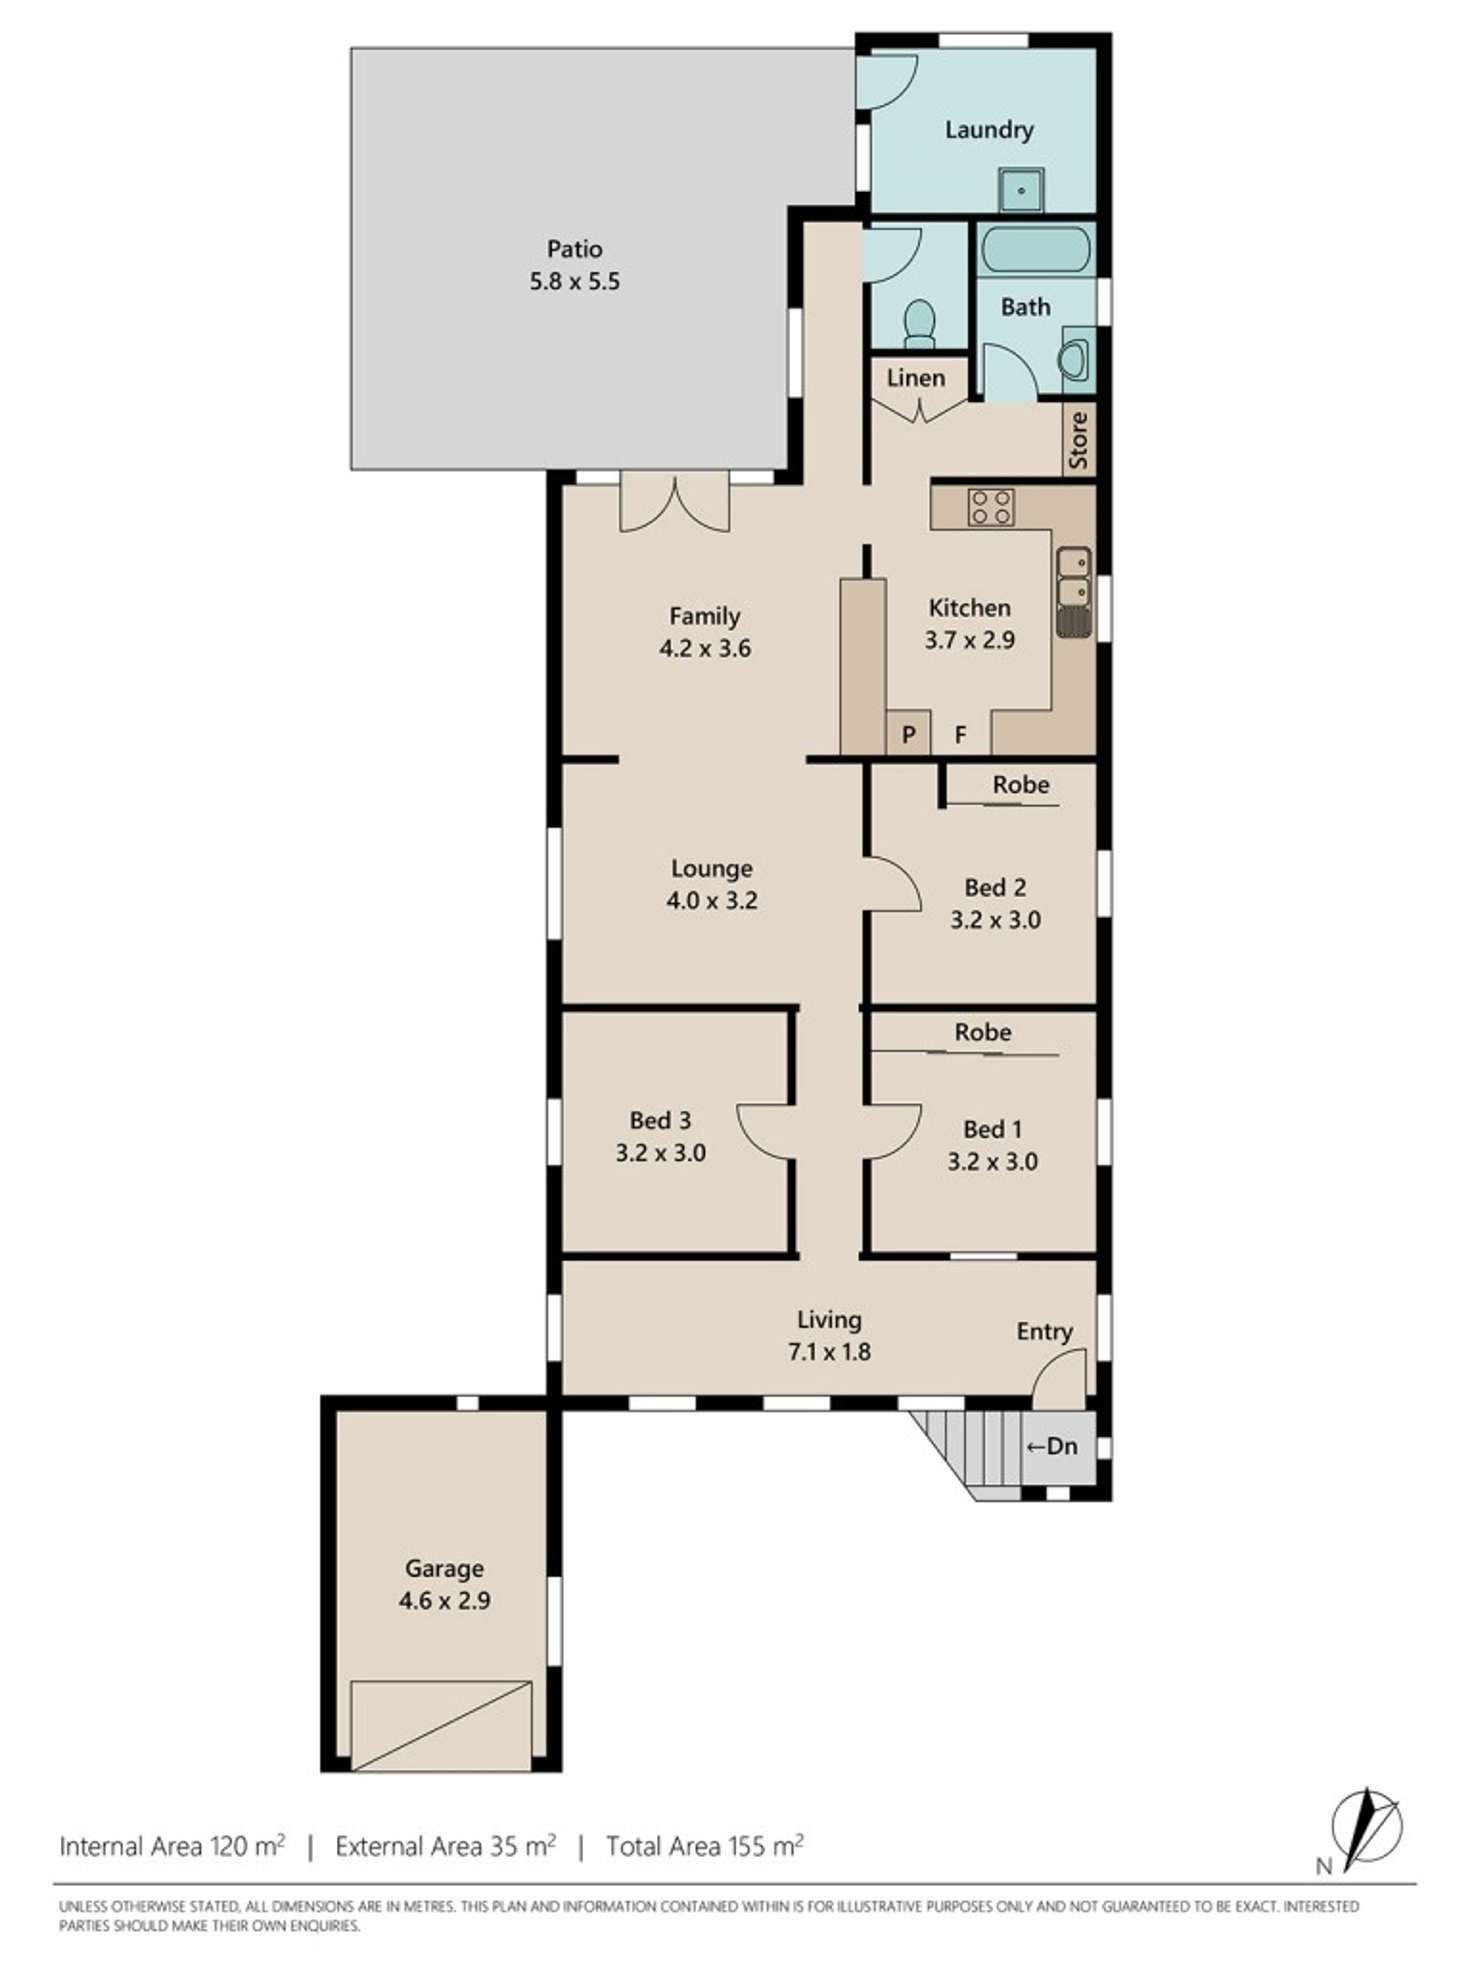 Floorplan of Homely house listing, 35 Park Street, Kelvin Grove QLD 4059